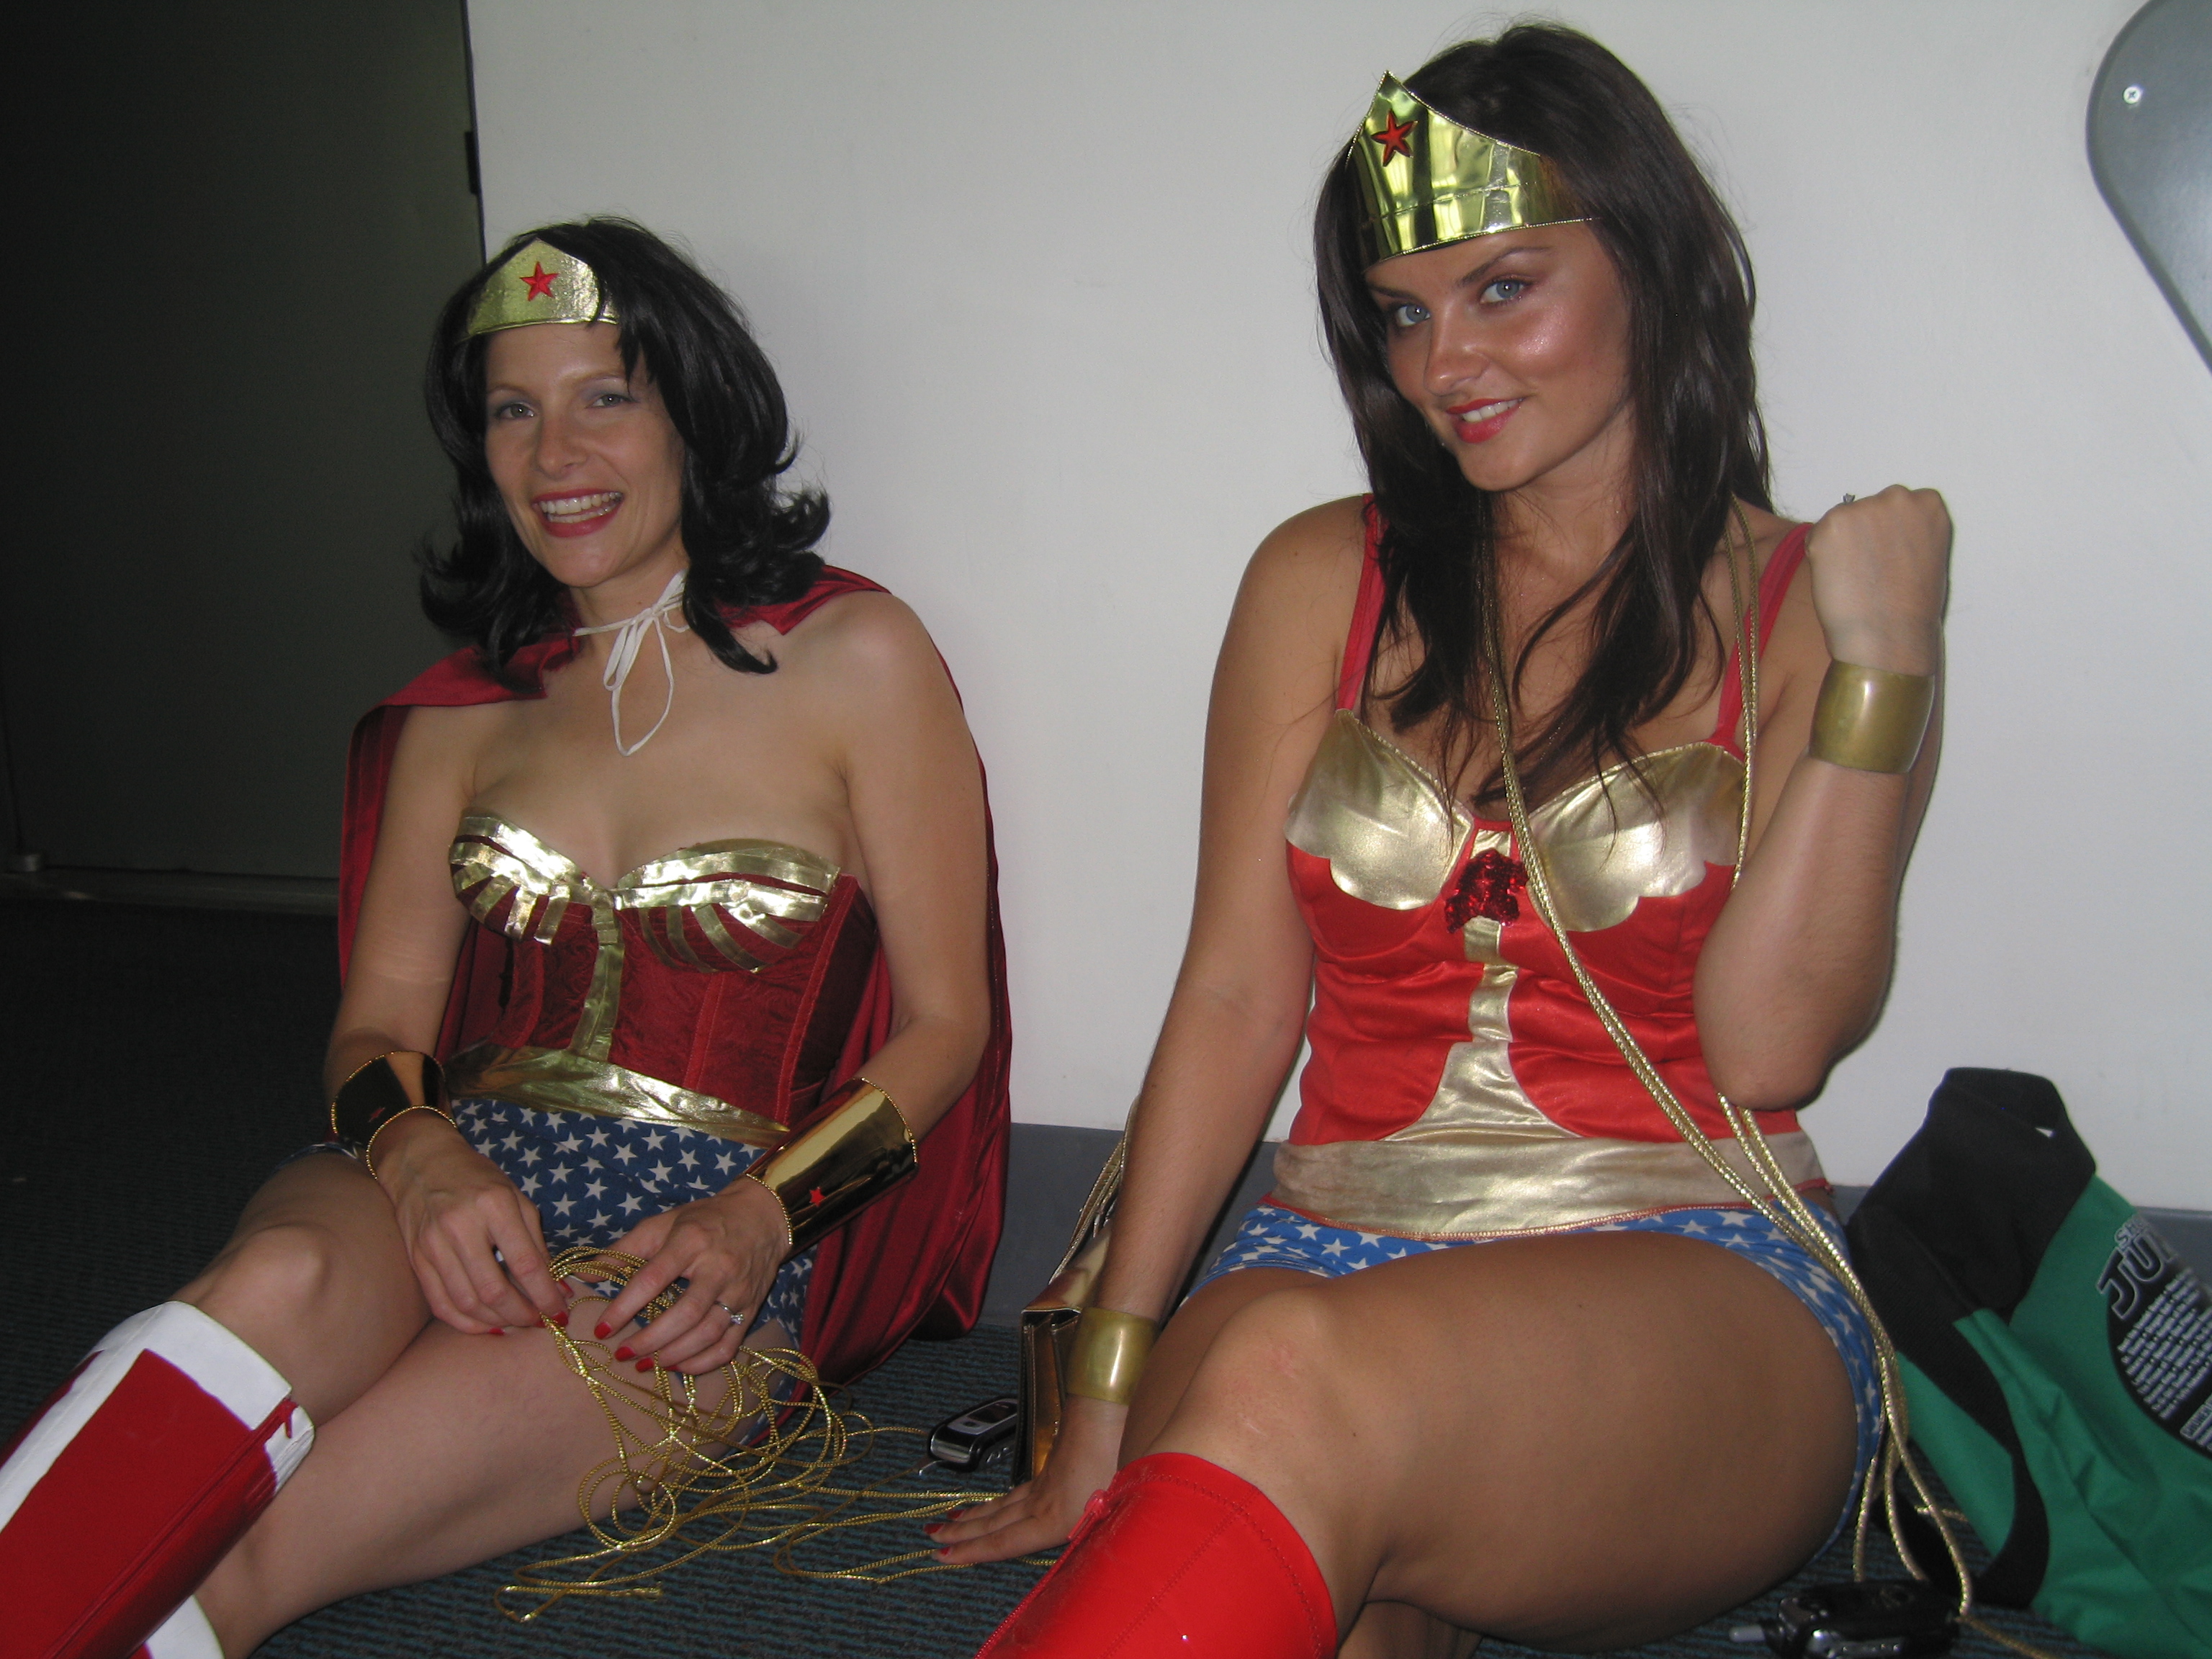 Wonderwoman and Wondergirl!